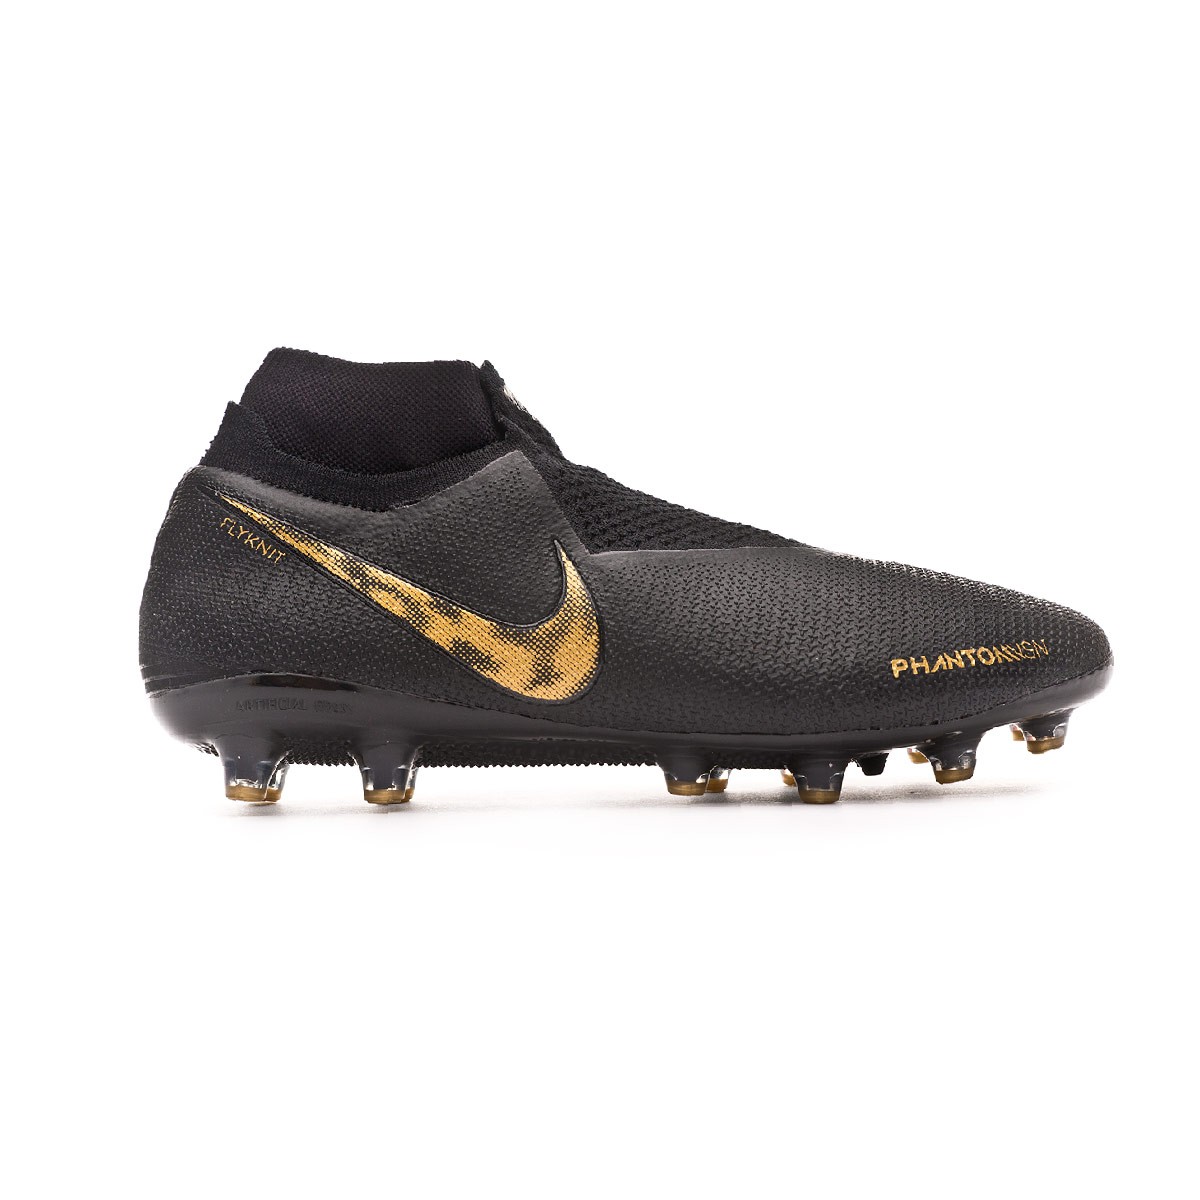 Phantom Football Boots Gold Top Sellers 